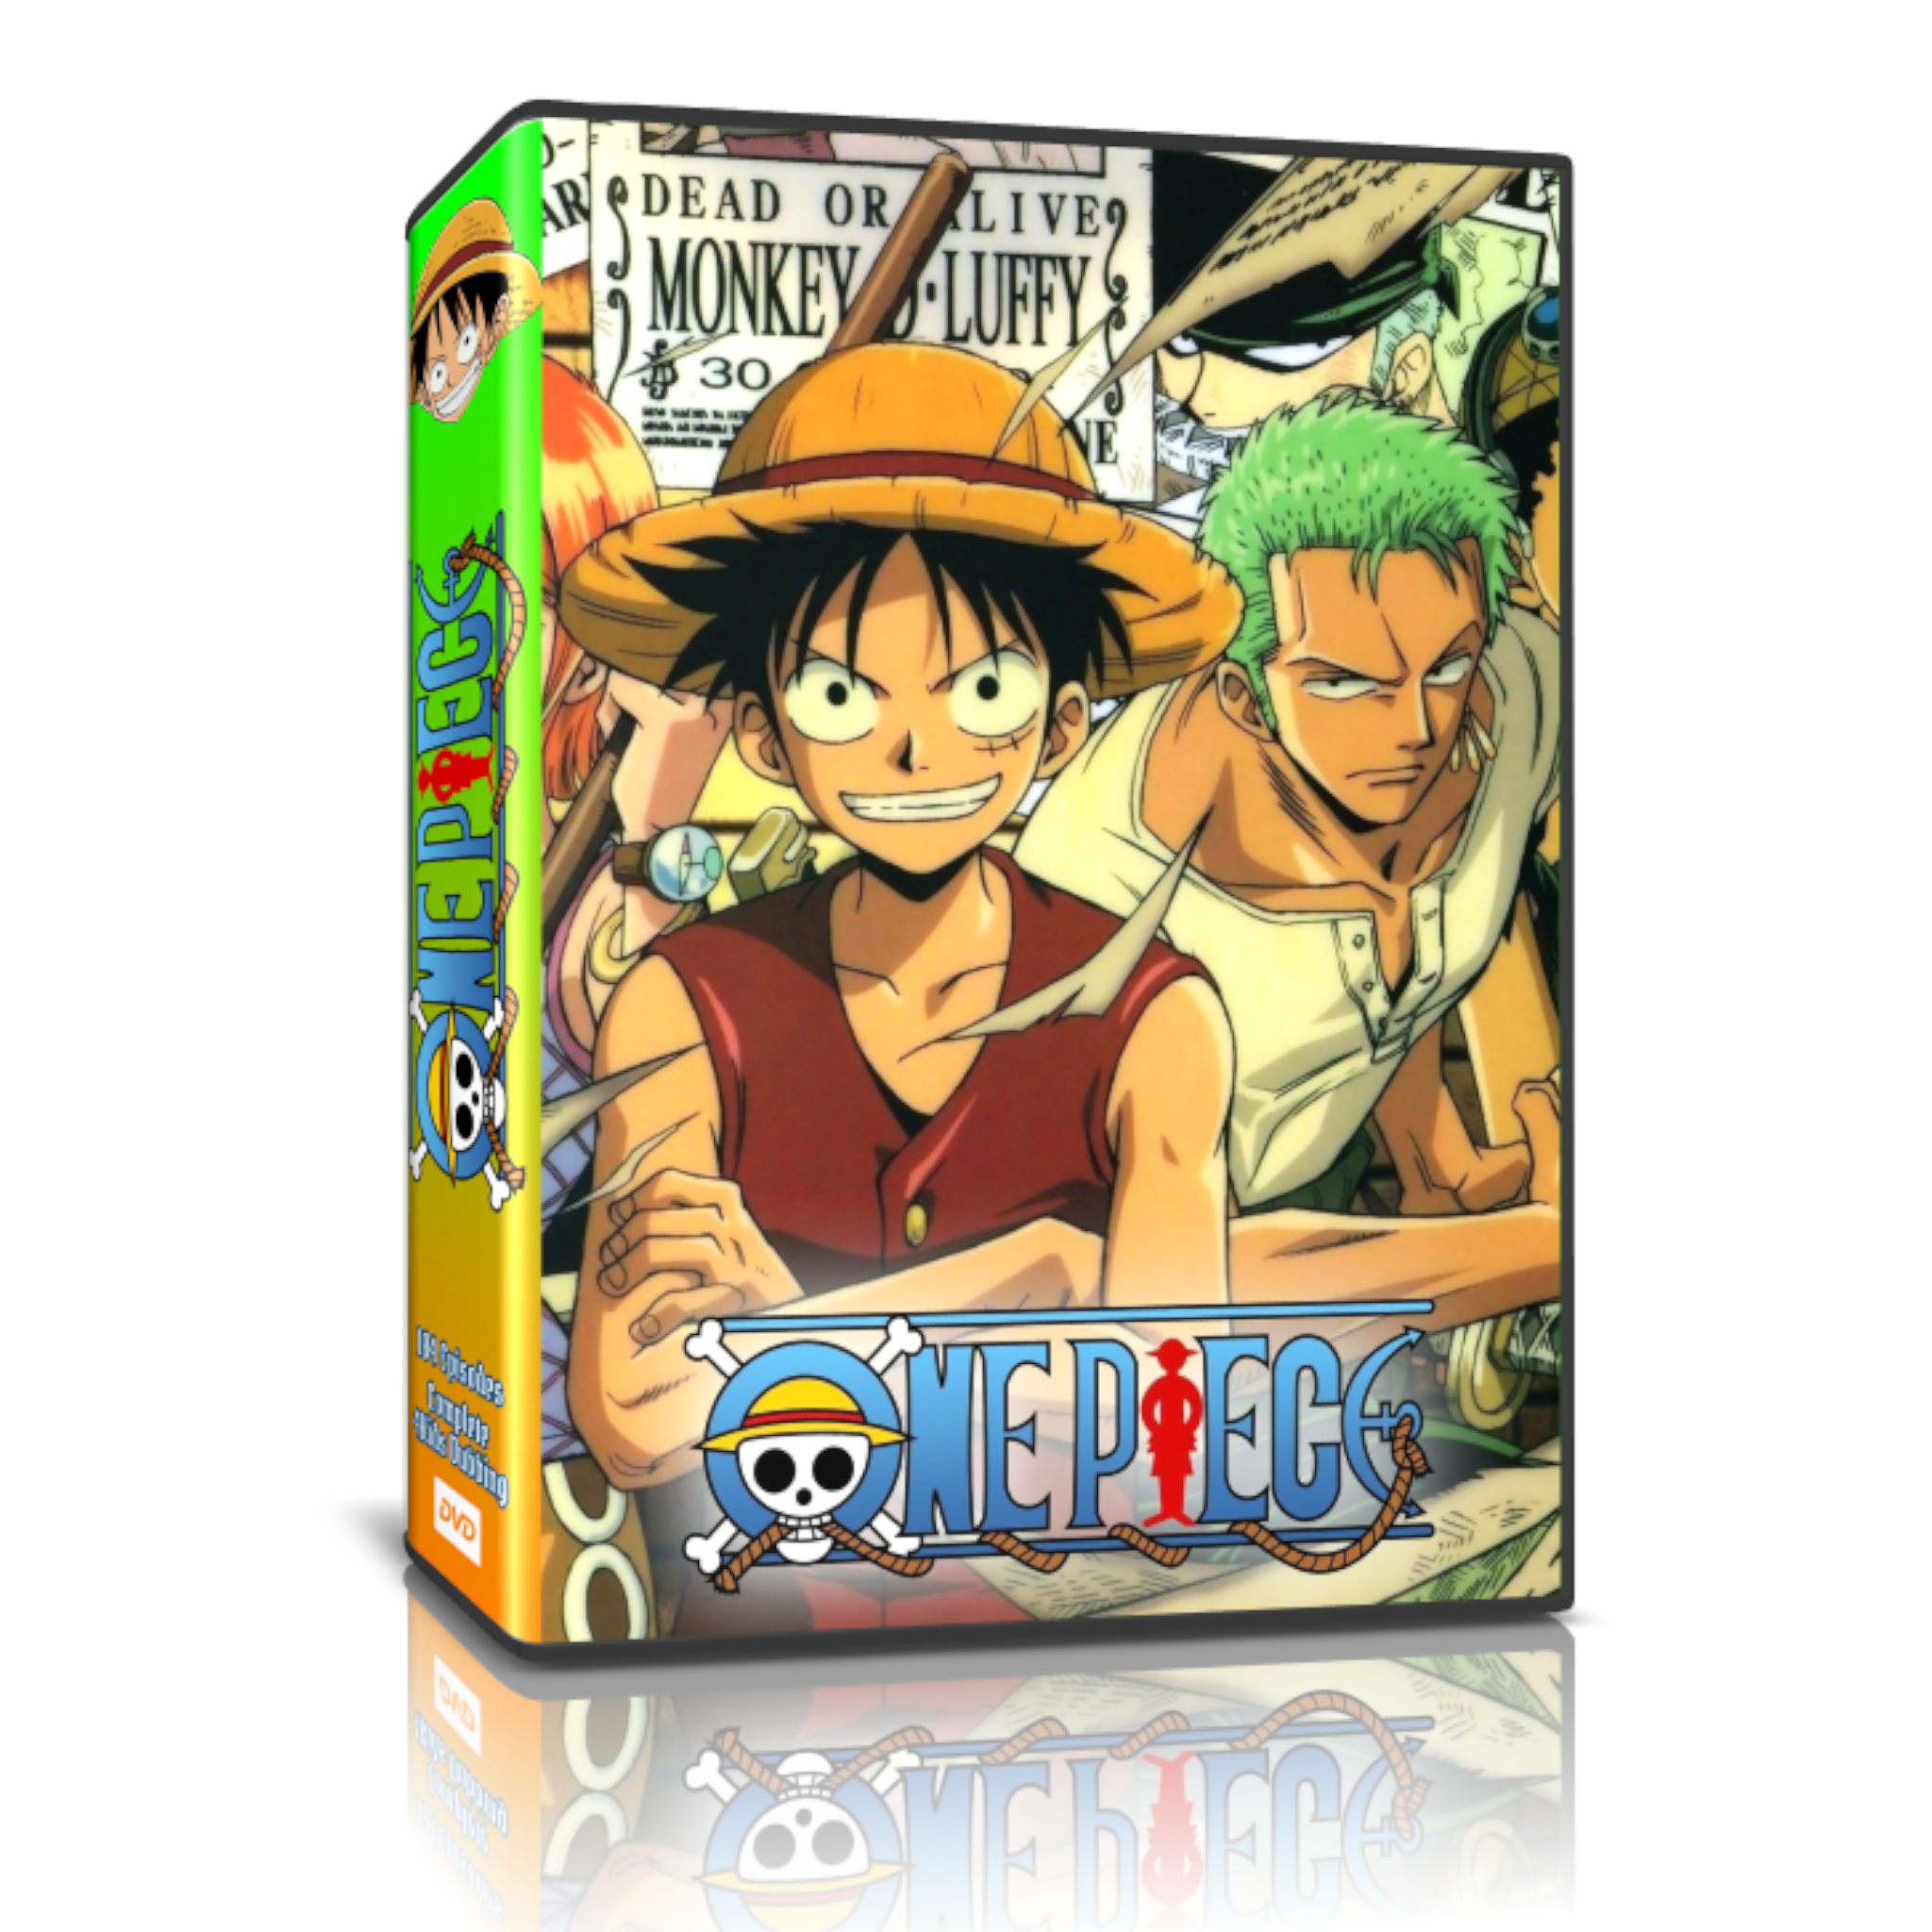 ONE PIECE (1-720) - ANIME TV SERIES DVD BOX SET (1-720 EPS) (ENGLISH DUBBED)